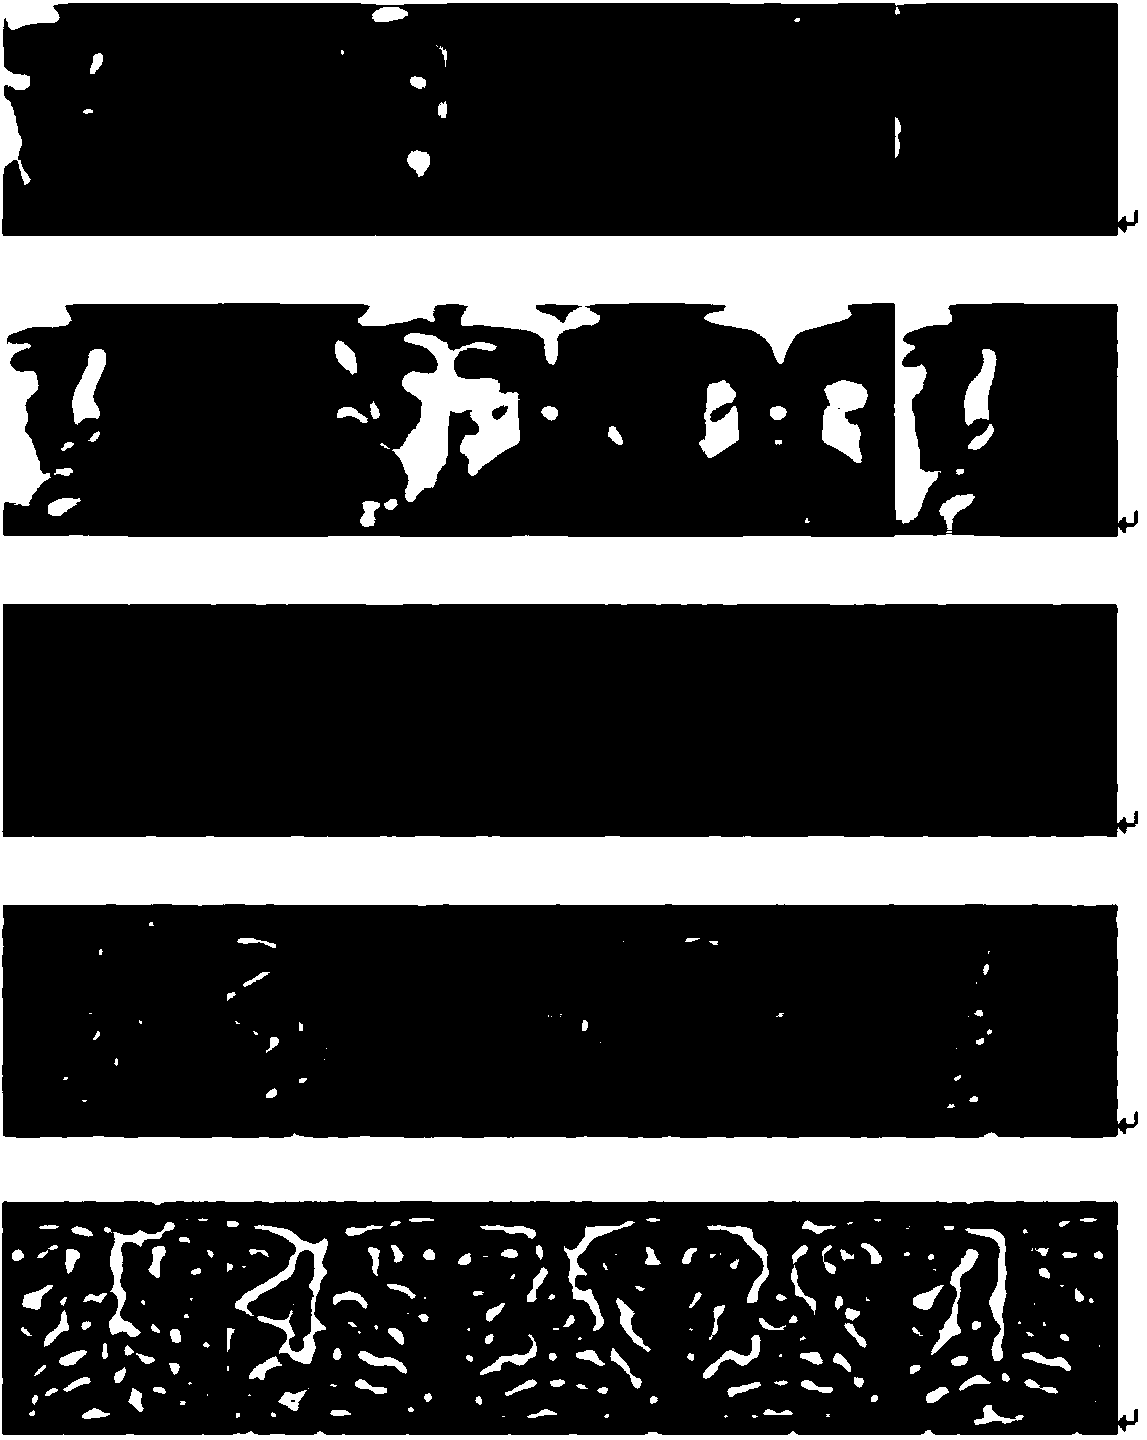 Face identification algorithm under different illumination conditions